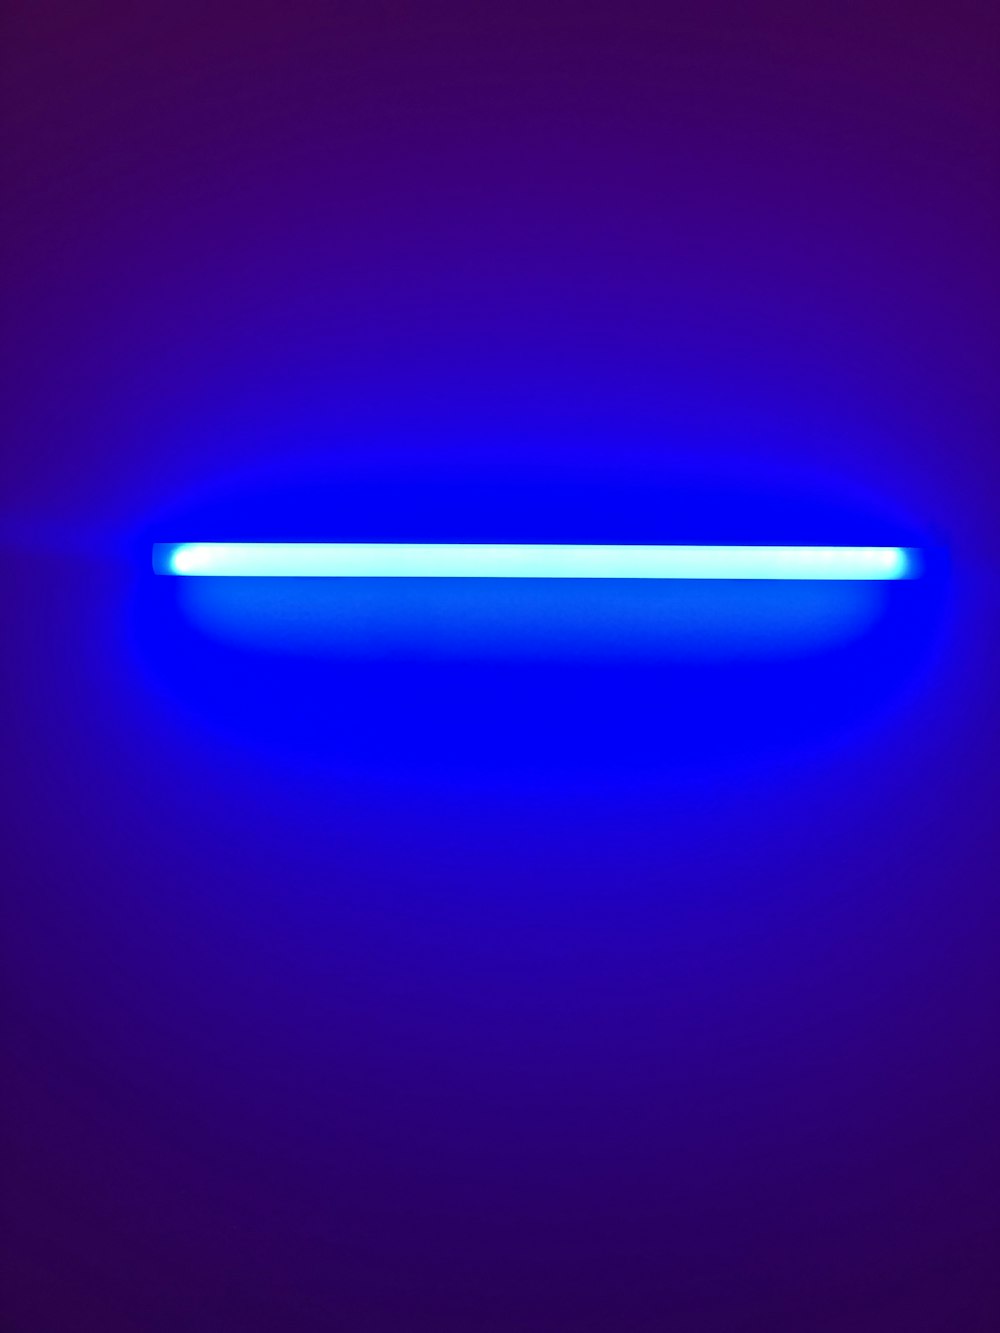 450+ Neon Blue | Download Free Images Unsplash